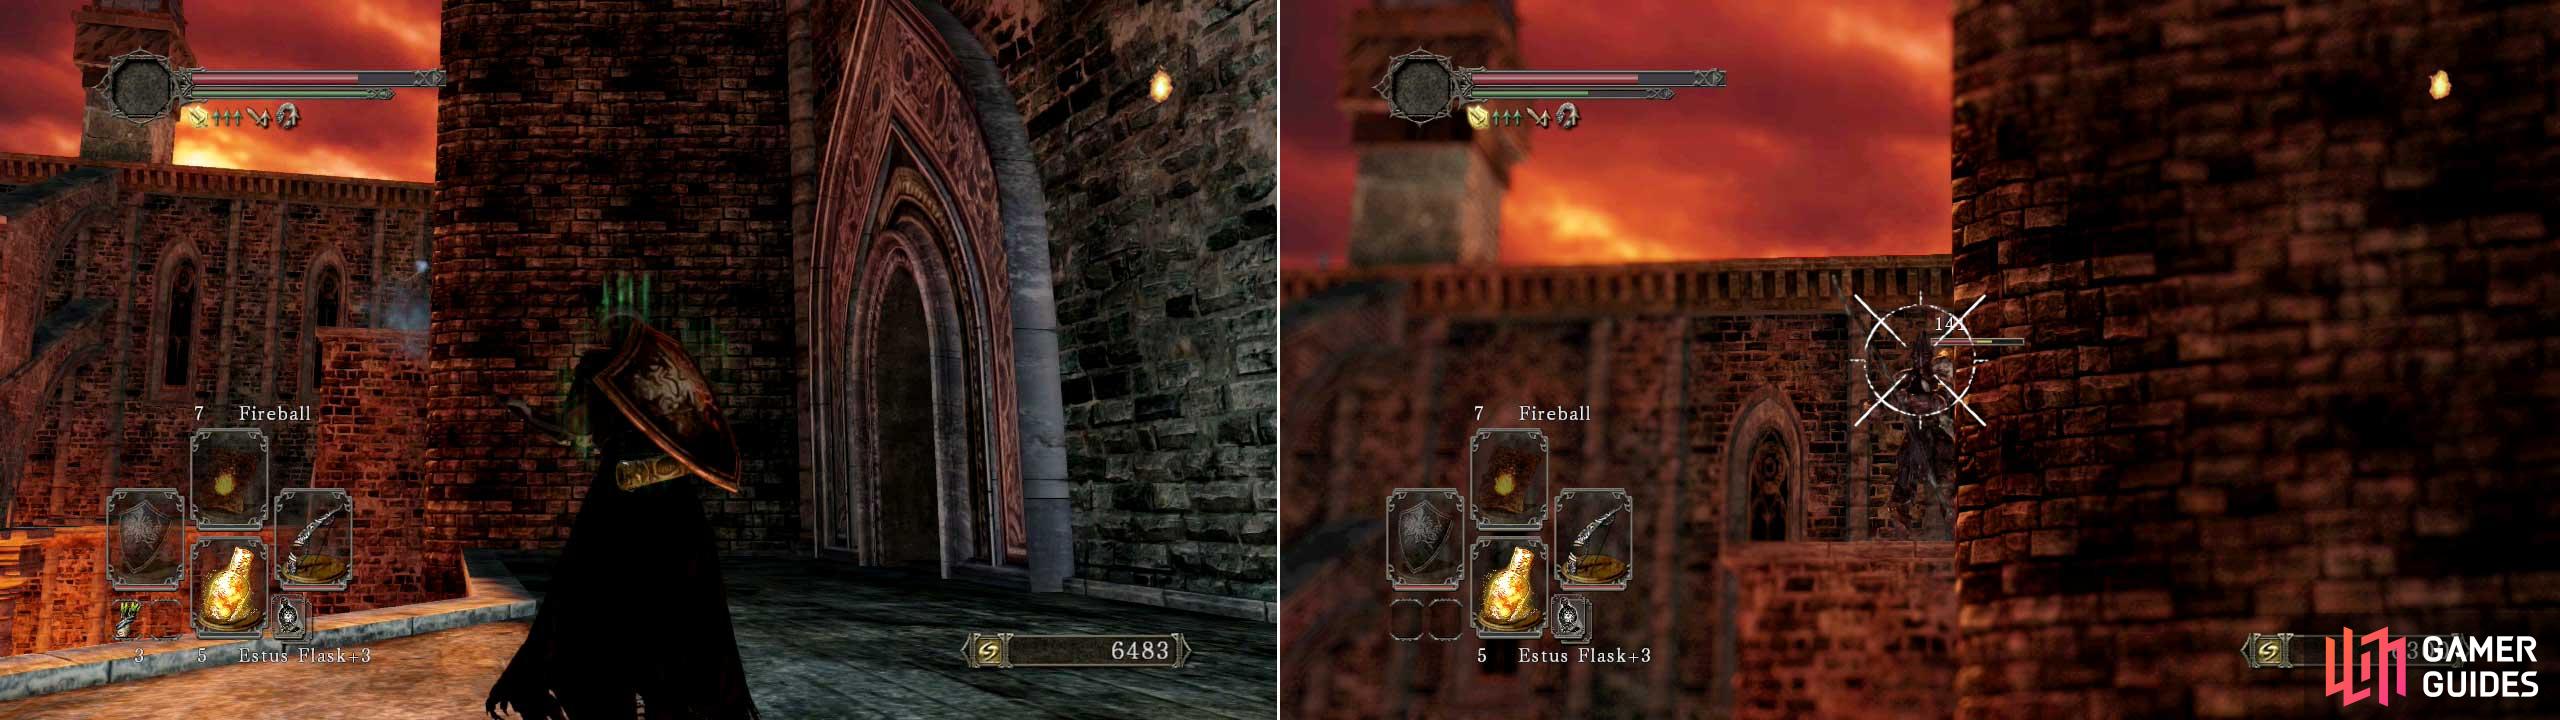 Harvest Valley, Walkthrough - Dark Souls II Game Guide & Walkthrough